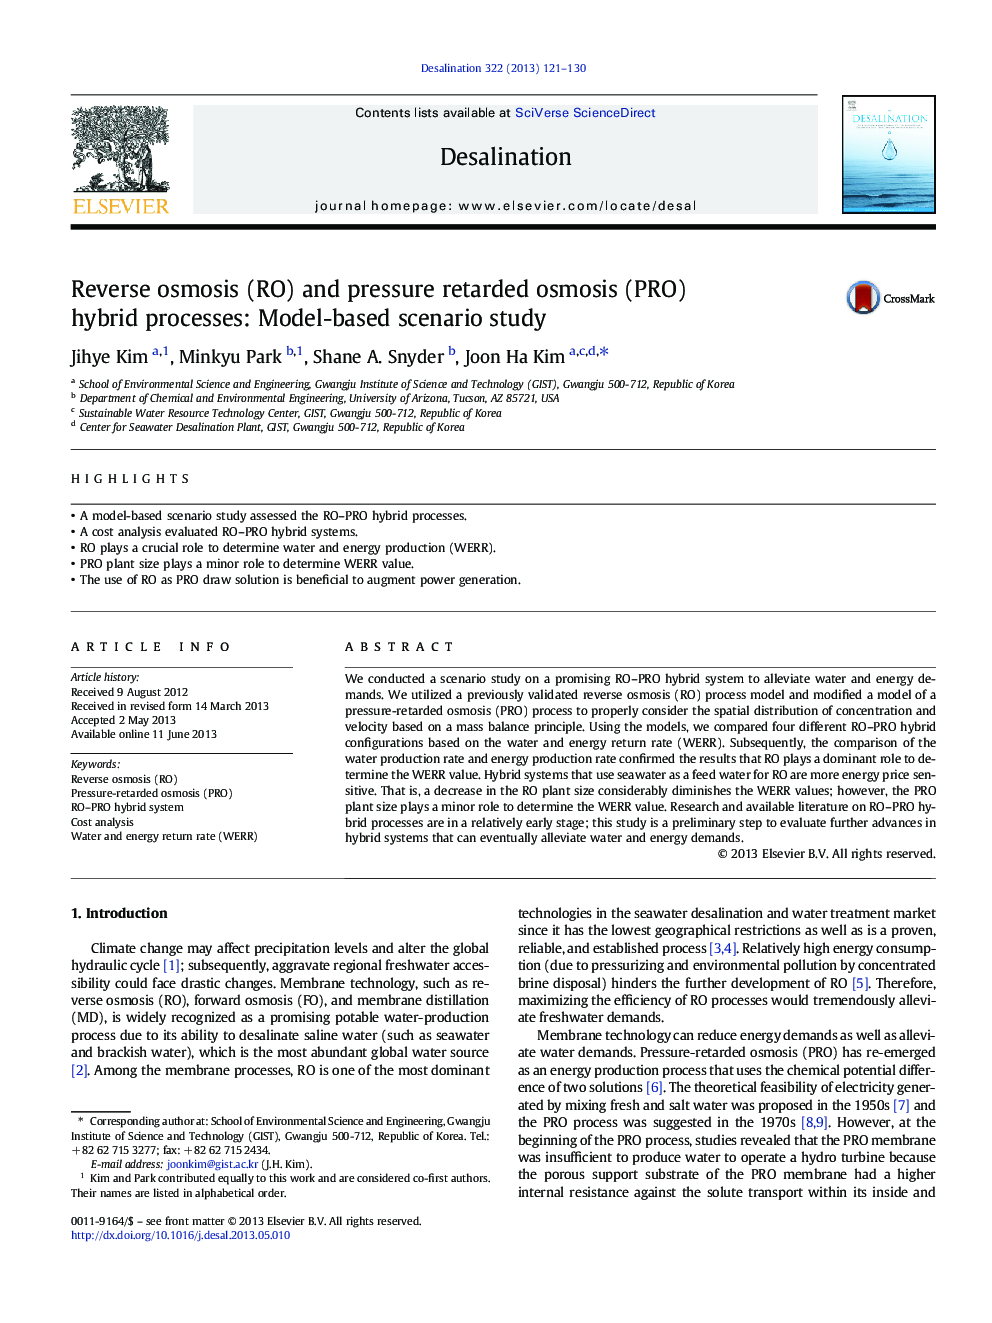 Reverse osmosis (RO) and pressure retarded osmosis (PRO) hybrid processes: Model-based scenario study